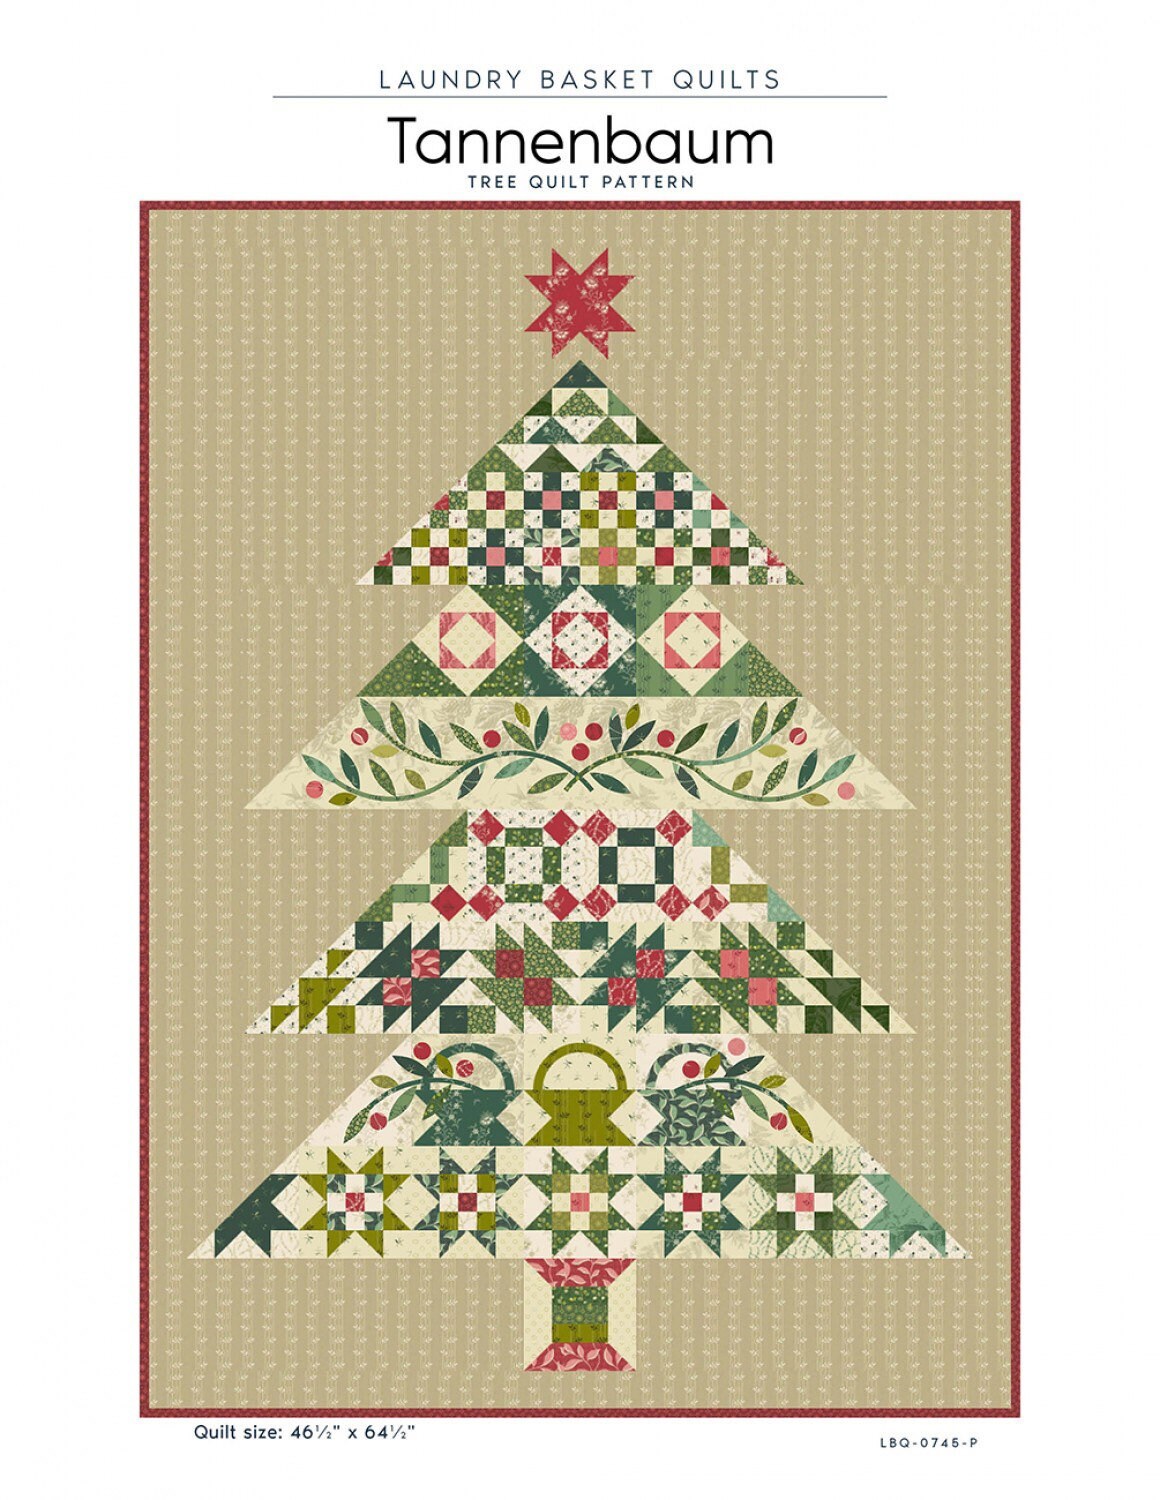 Tannenbaum Quilt Pattern - Laundry Basket Quilts - Edyta Sitar - Christmas Tree Quilt Pattern - Christmas Quilt Pattern